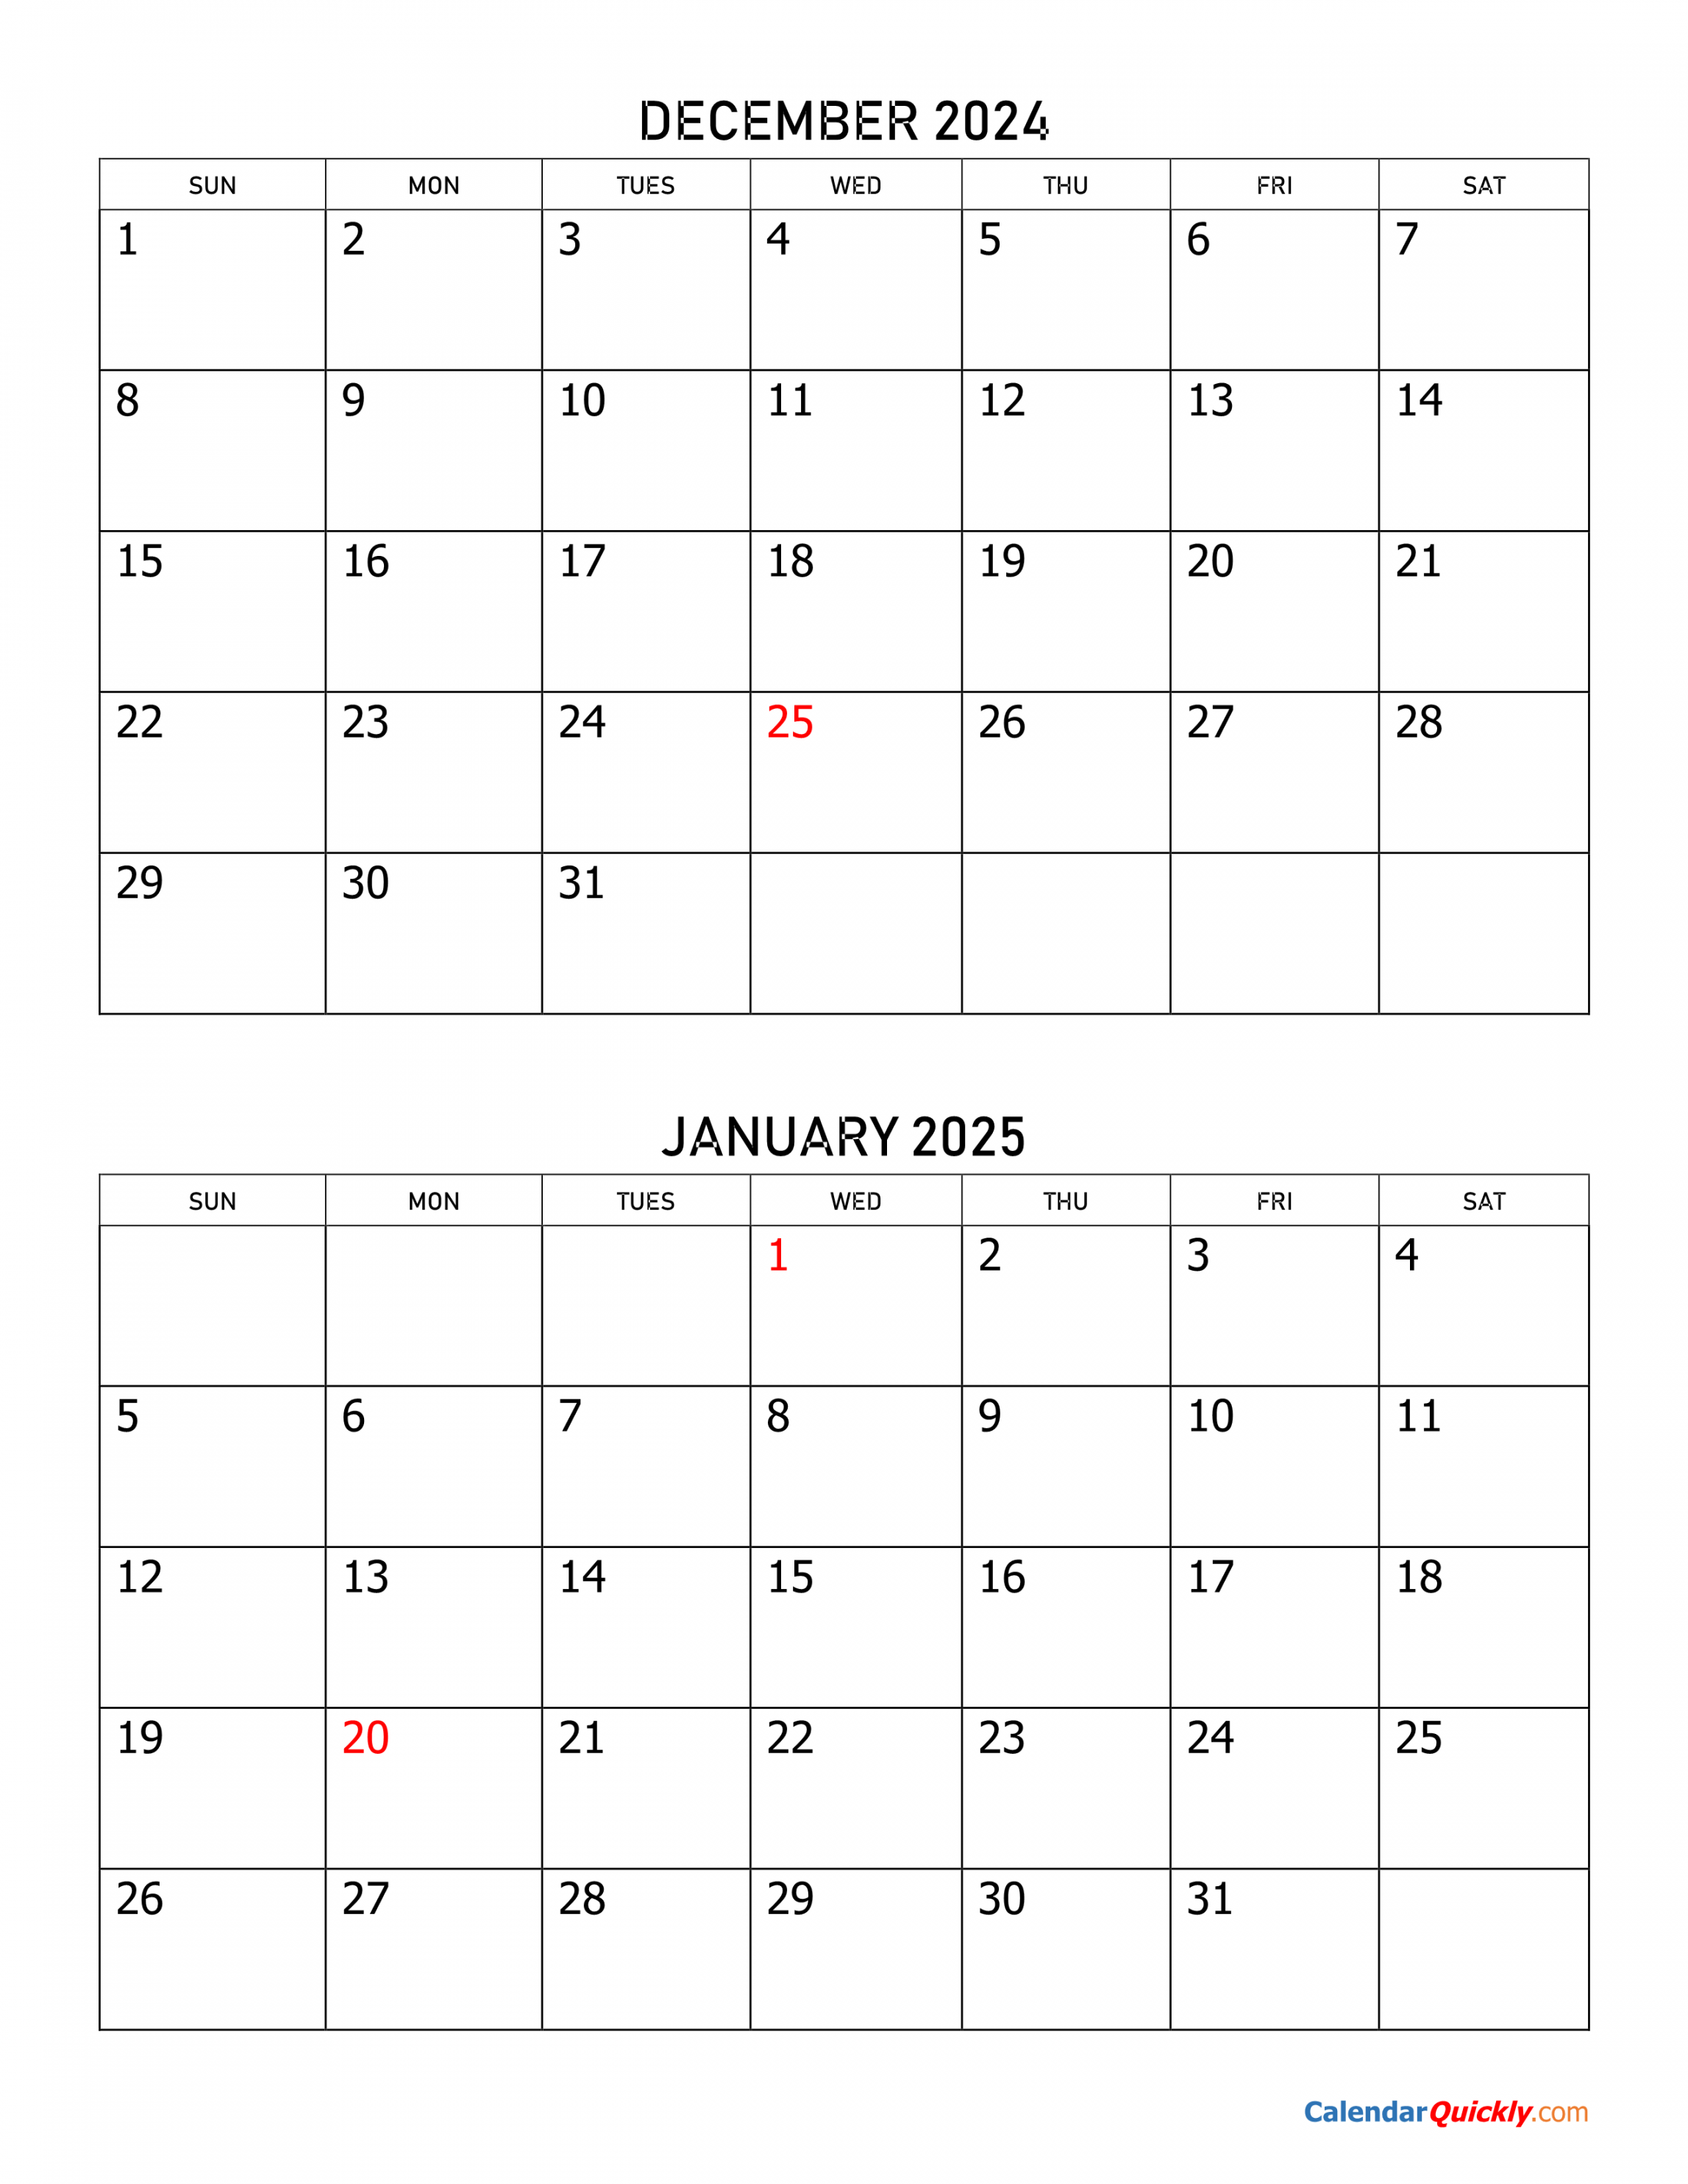 december and january calendar calendar quickly 0